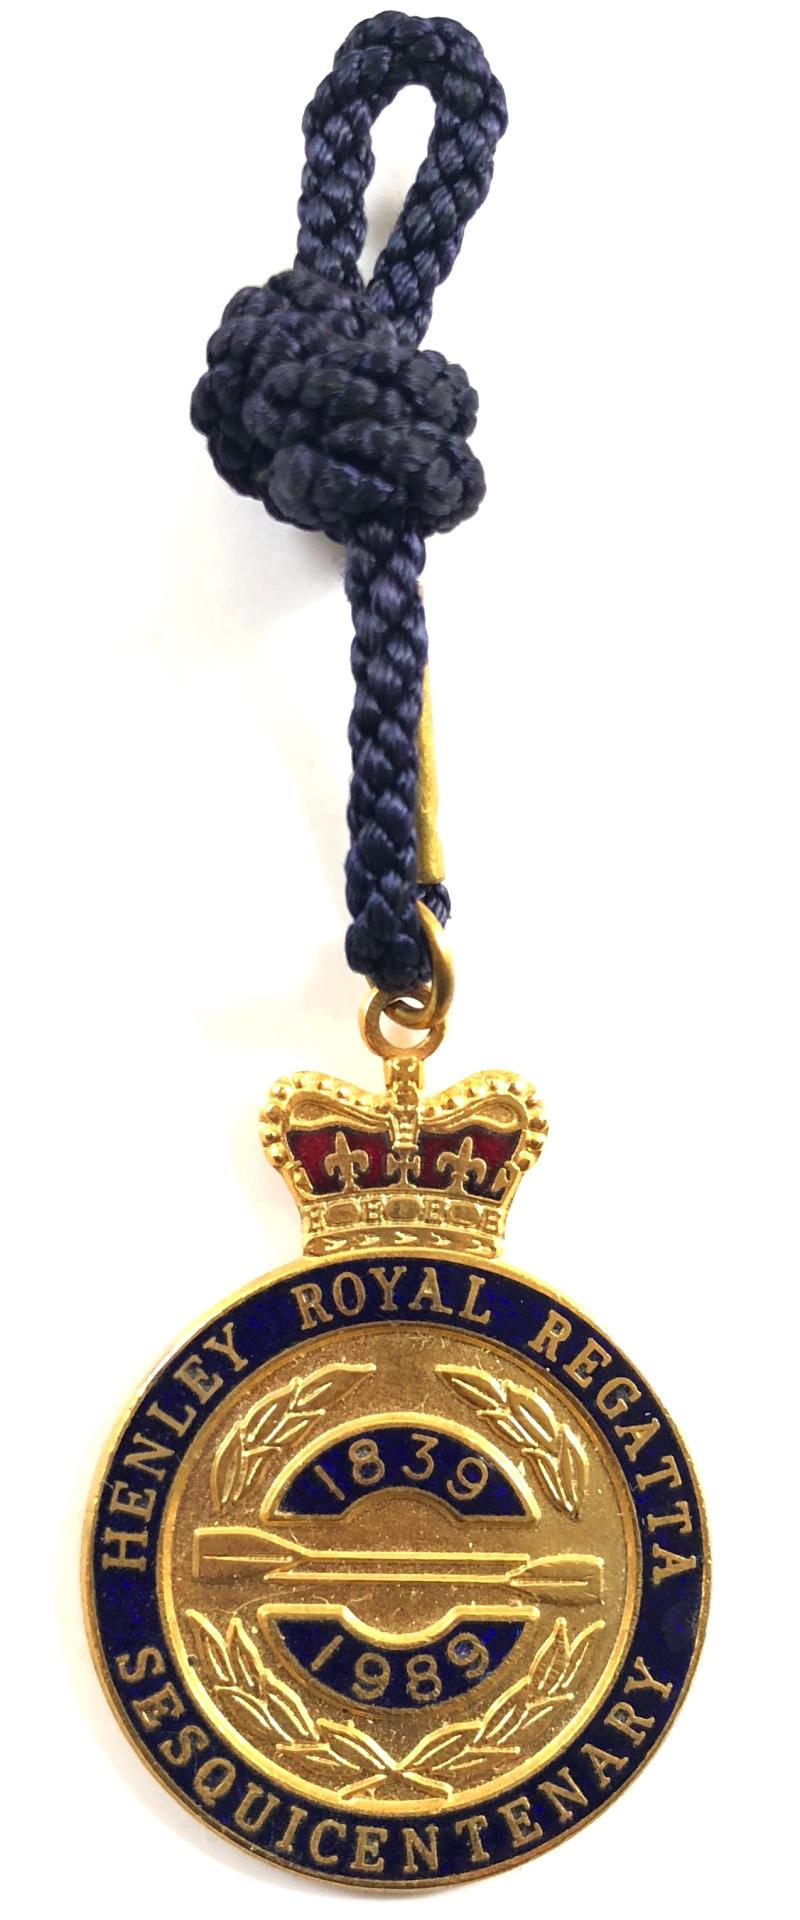 1989 Henley Royal Regatta Sesquicentenary stewards enclosure badge